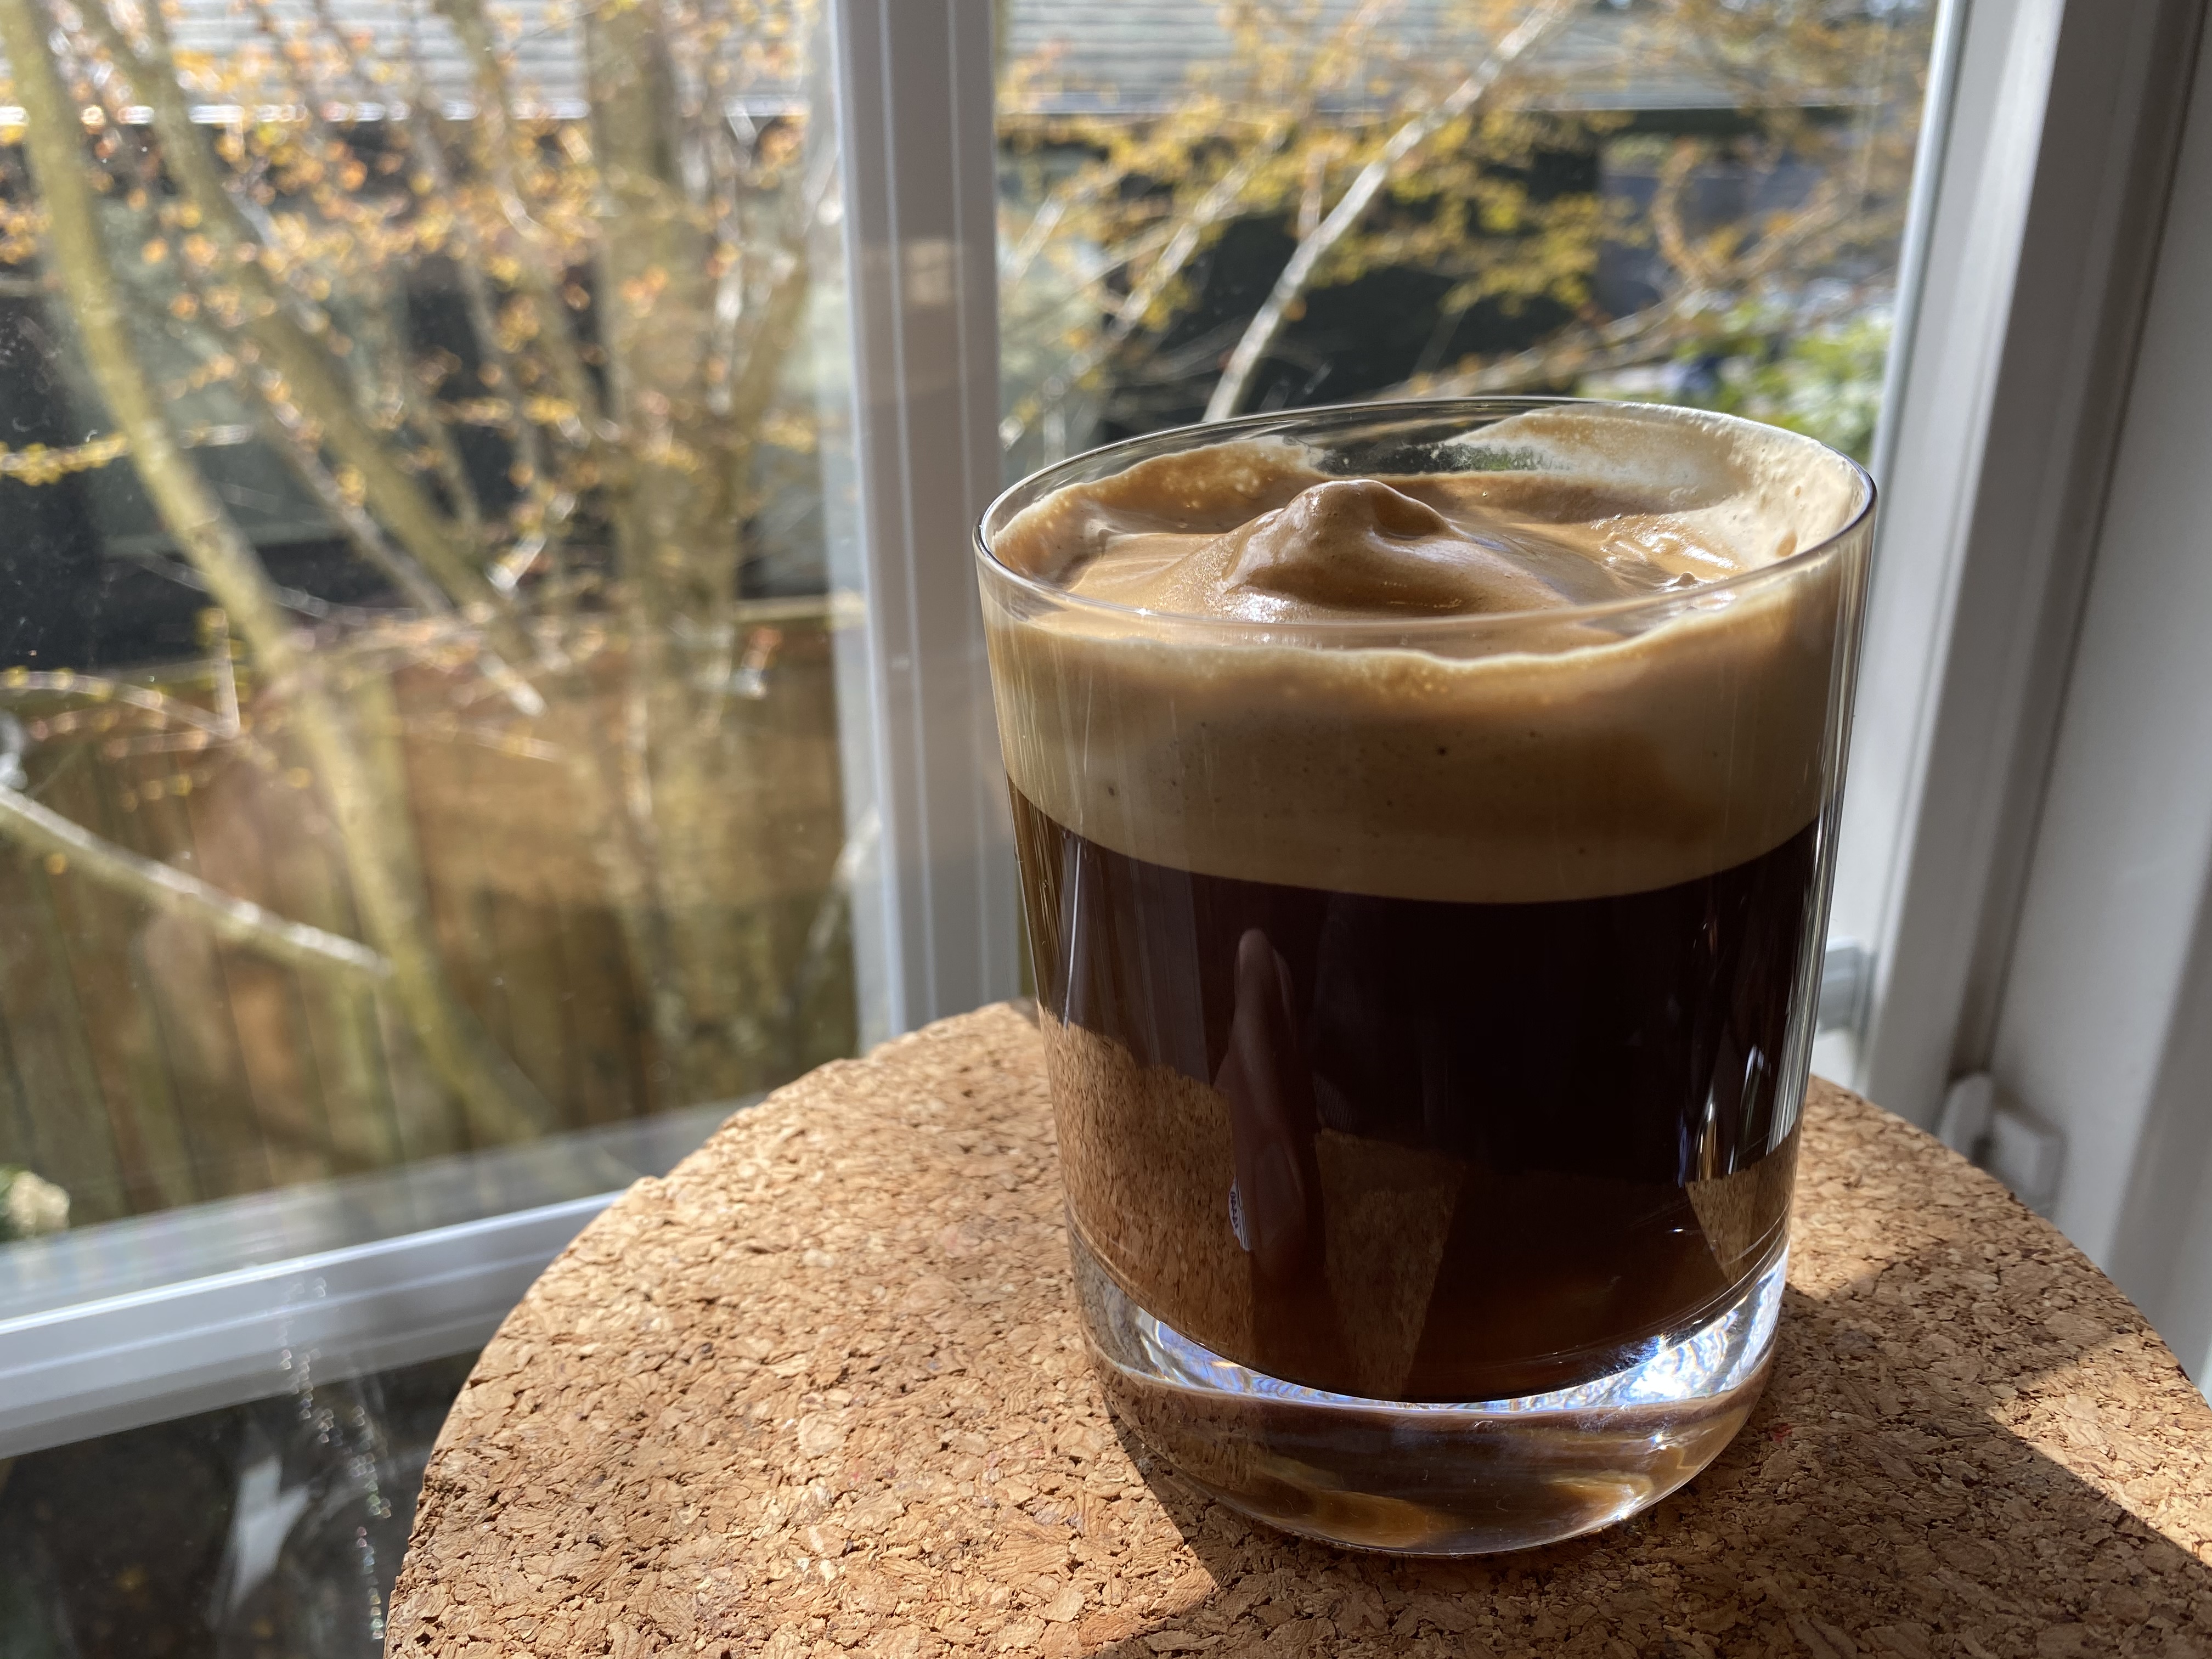 Dalgona Coffee (Whipped Coffee) Ryan Schroeder